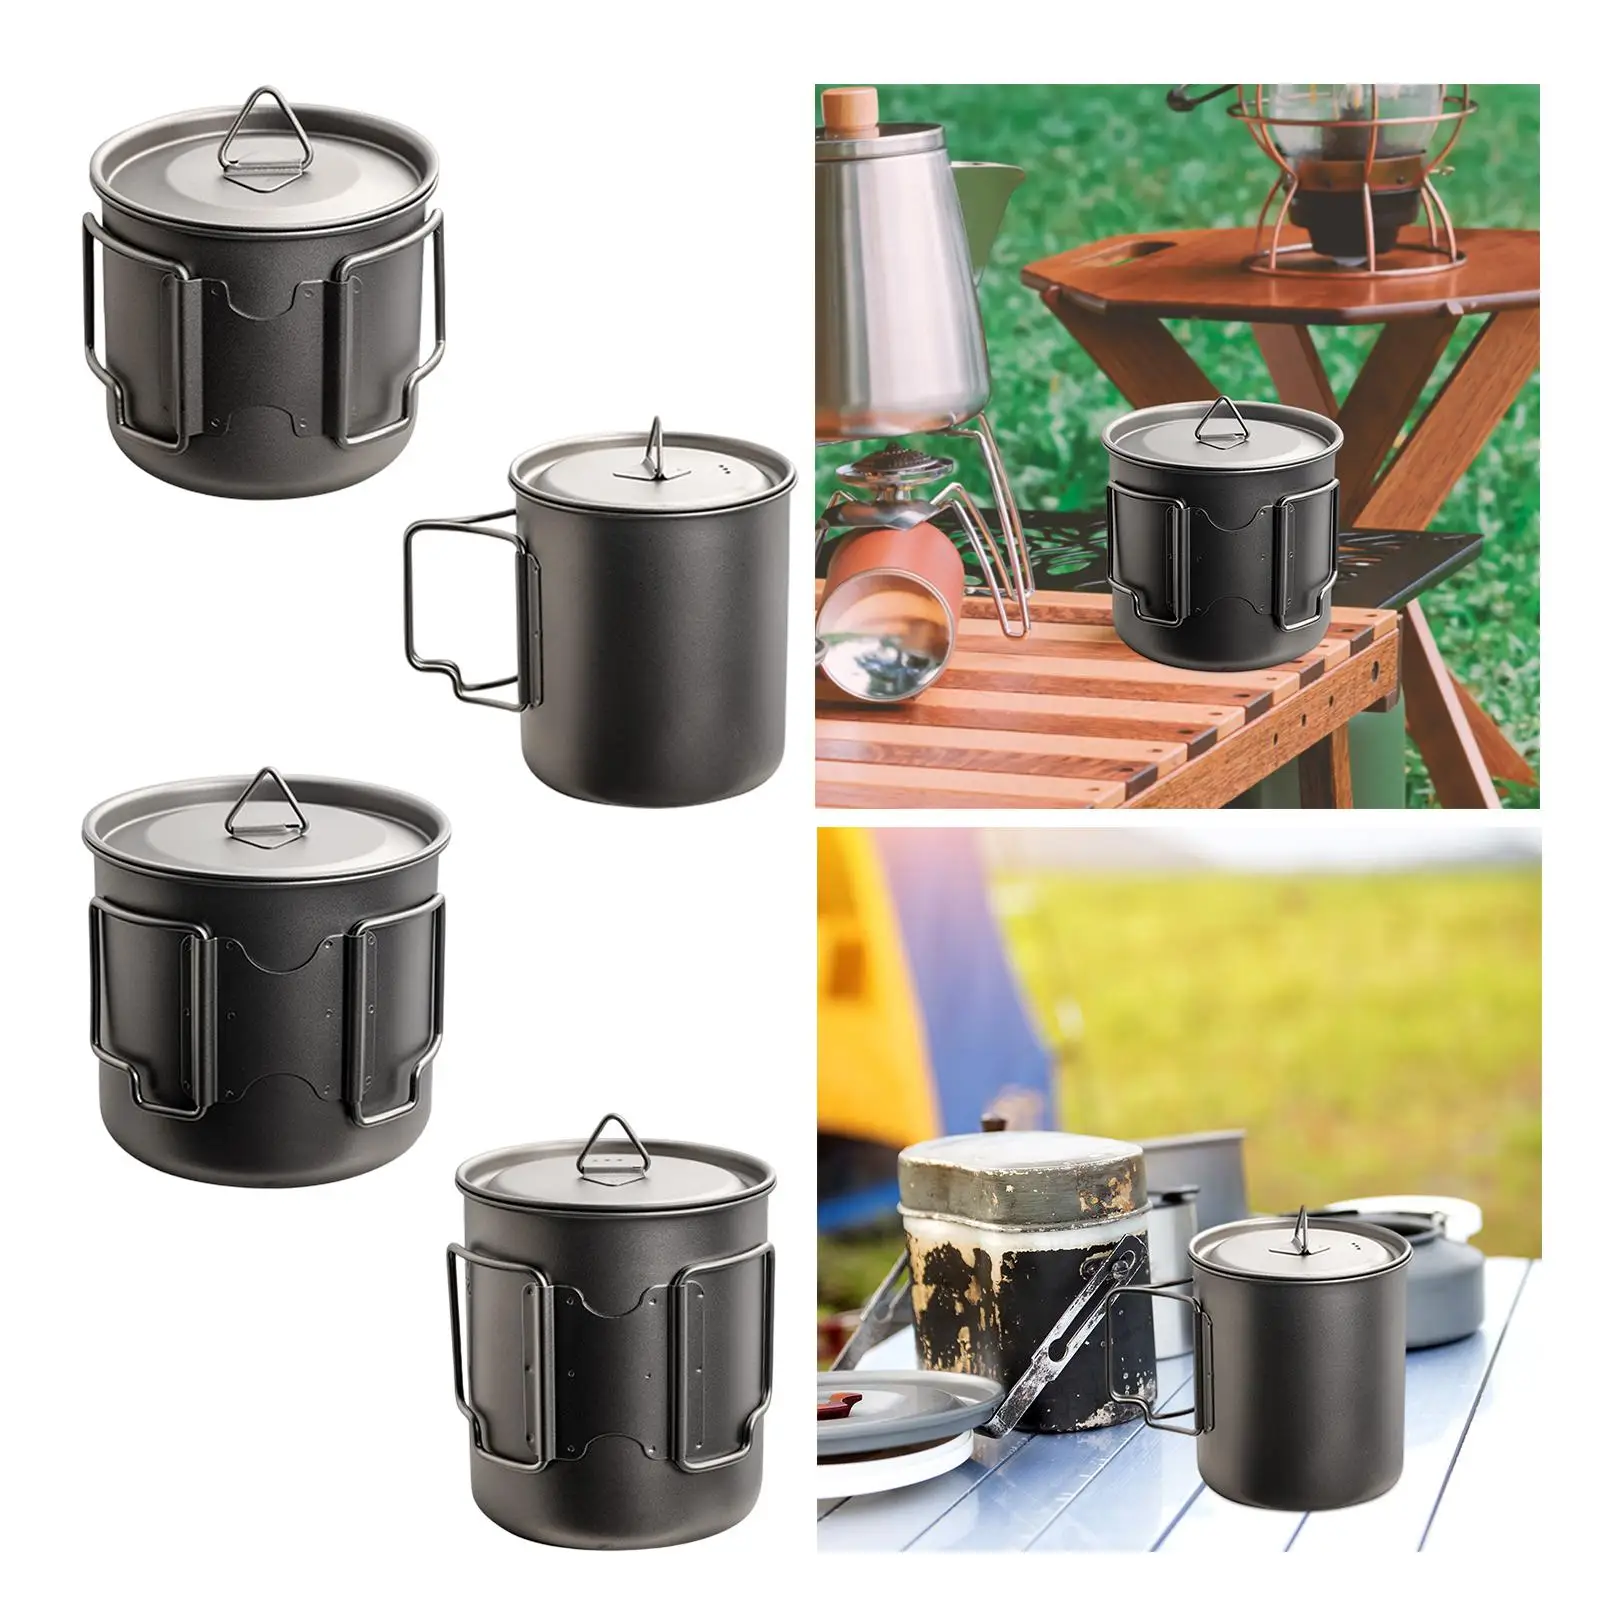 Titanium Pot Backpacking, Titanium Cup Titanium Tea Cup Camping Coffee Mug for Picnic